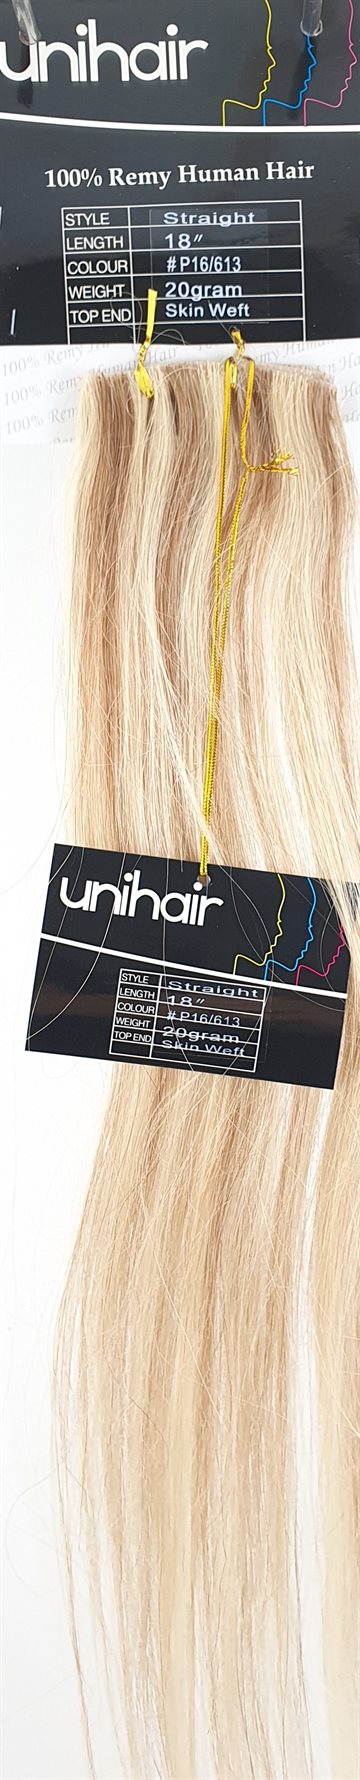 Human Hair - Skin Weft hair (tape on) color P16/613 -  45 cm. length.)